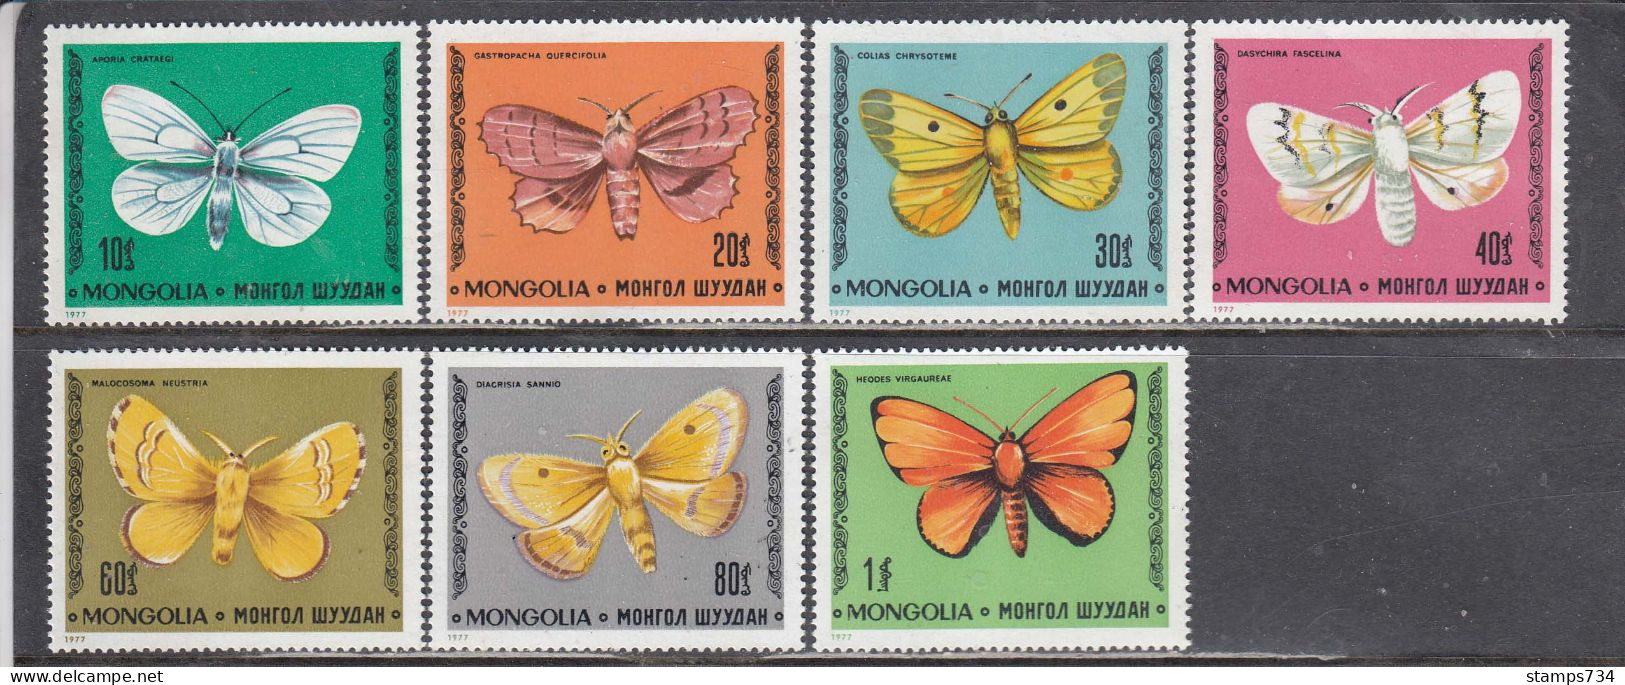 Mongolia 1977 - Butterflies, Mi-Nr. 1099/105, MNH** - Mongolei